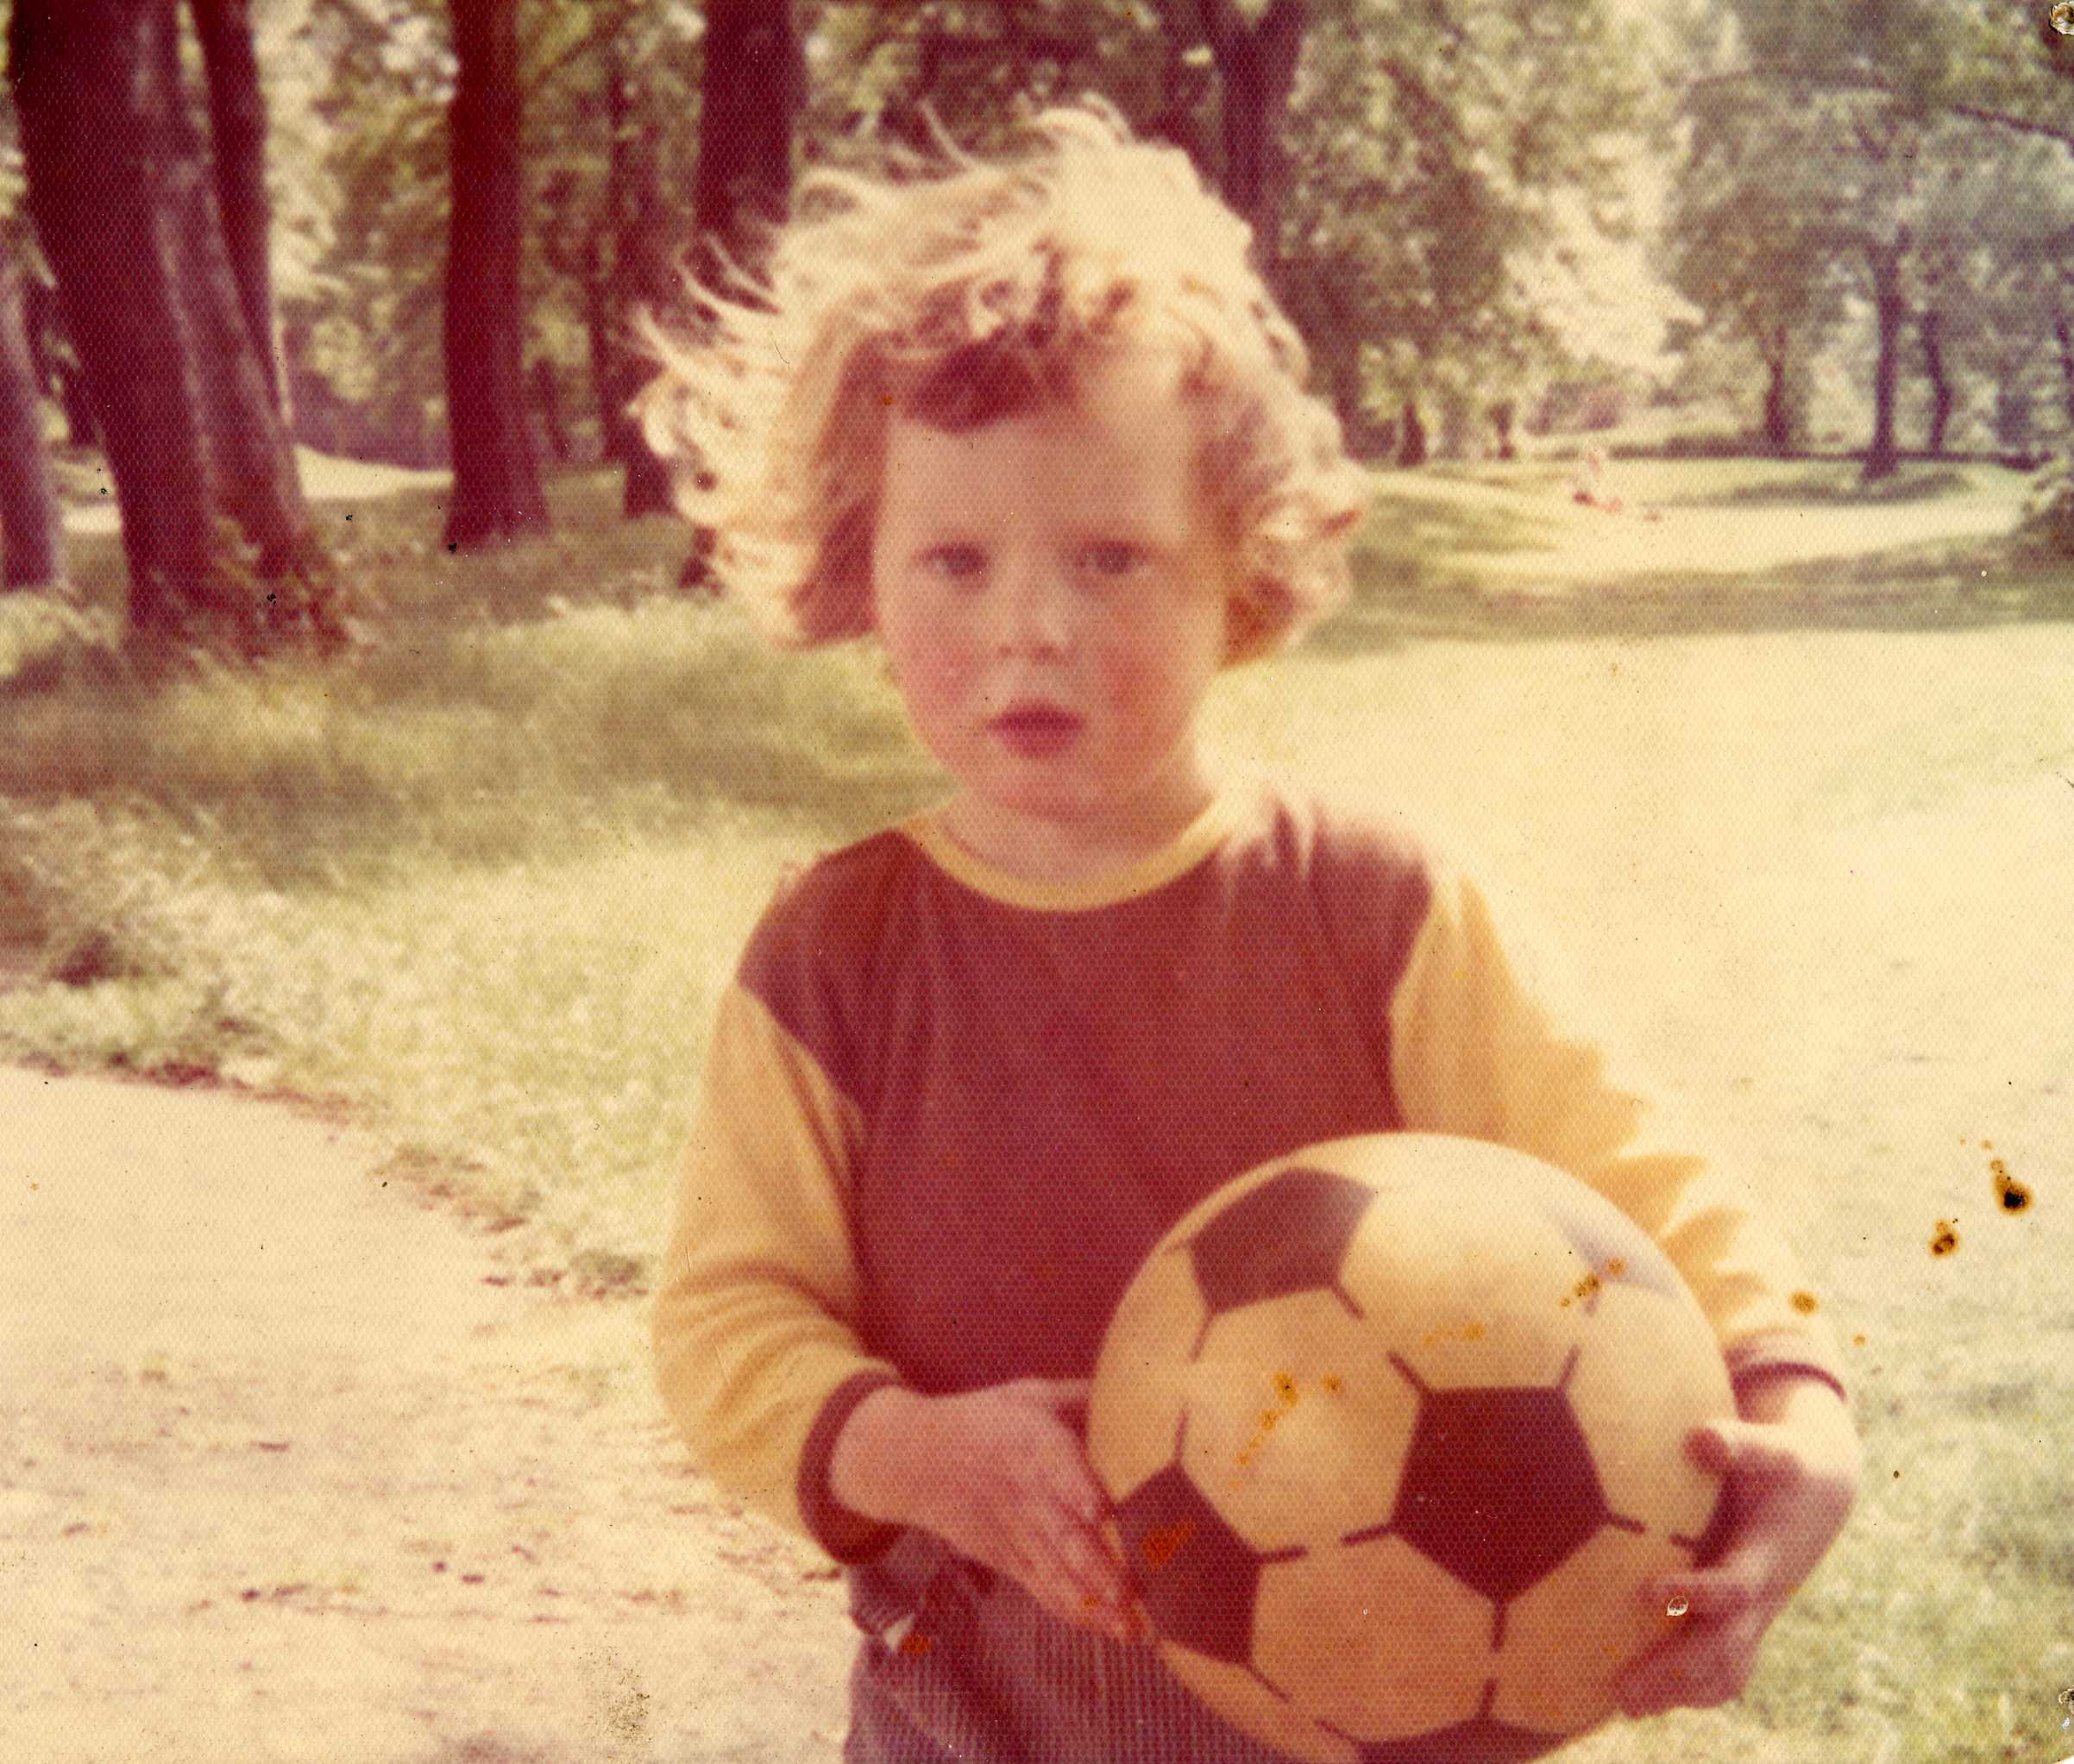 Soccer Nostalgia: Compendium to The Soccernostalgia Talk Podcast